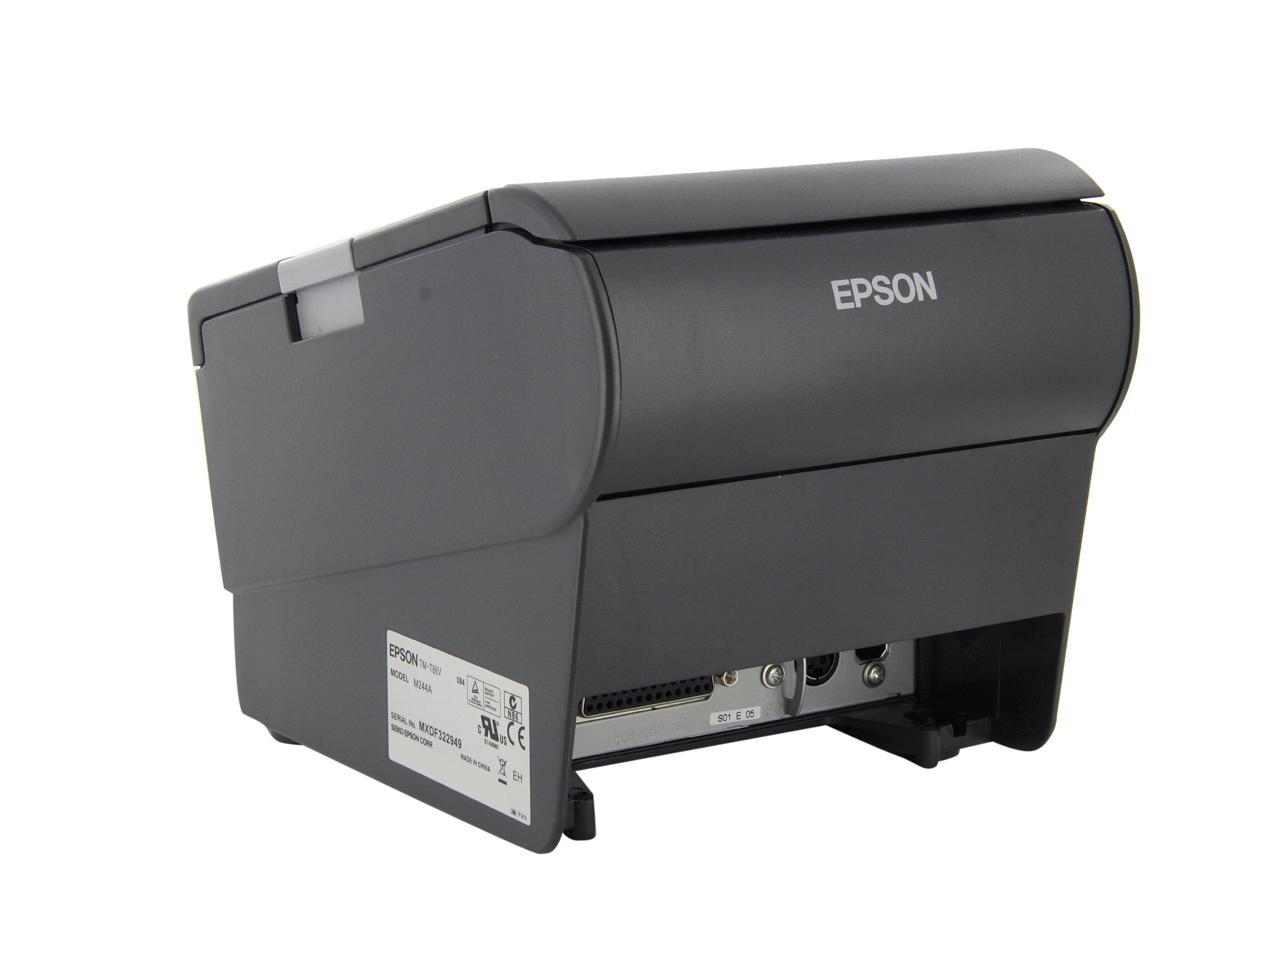 Epson Tm T88v Direct Thermal Printer Monochrome Desktop Receipt Print Neweggca 7837